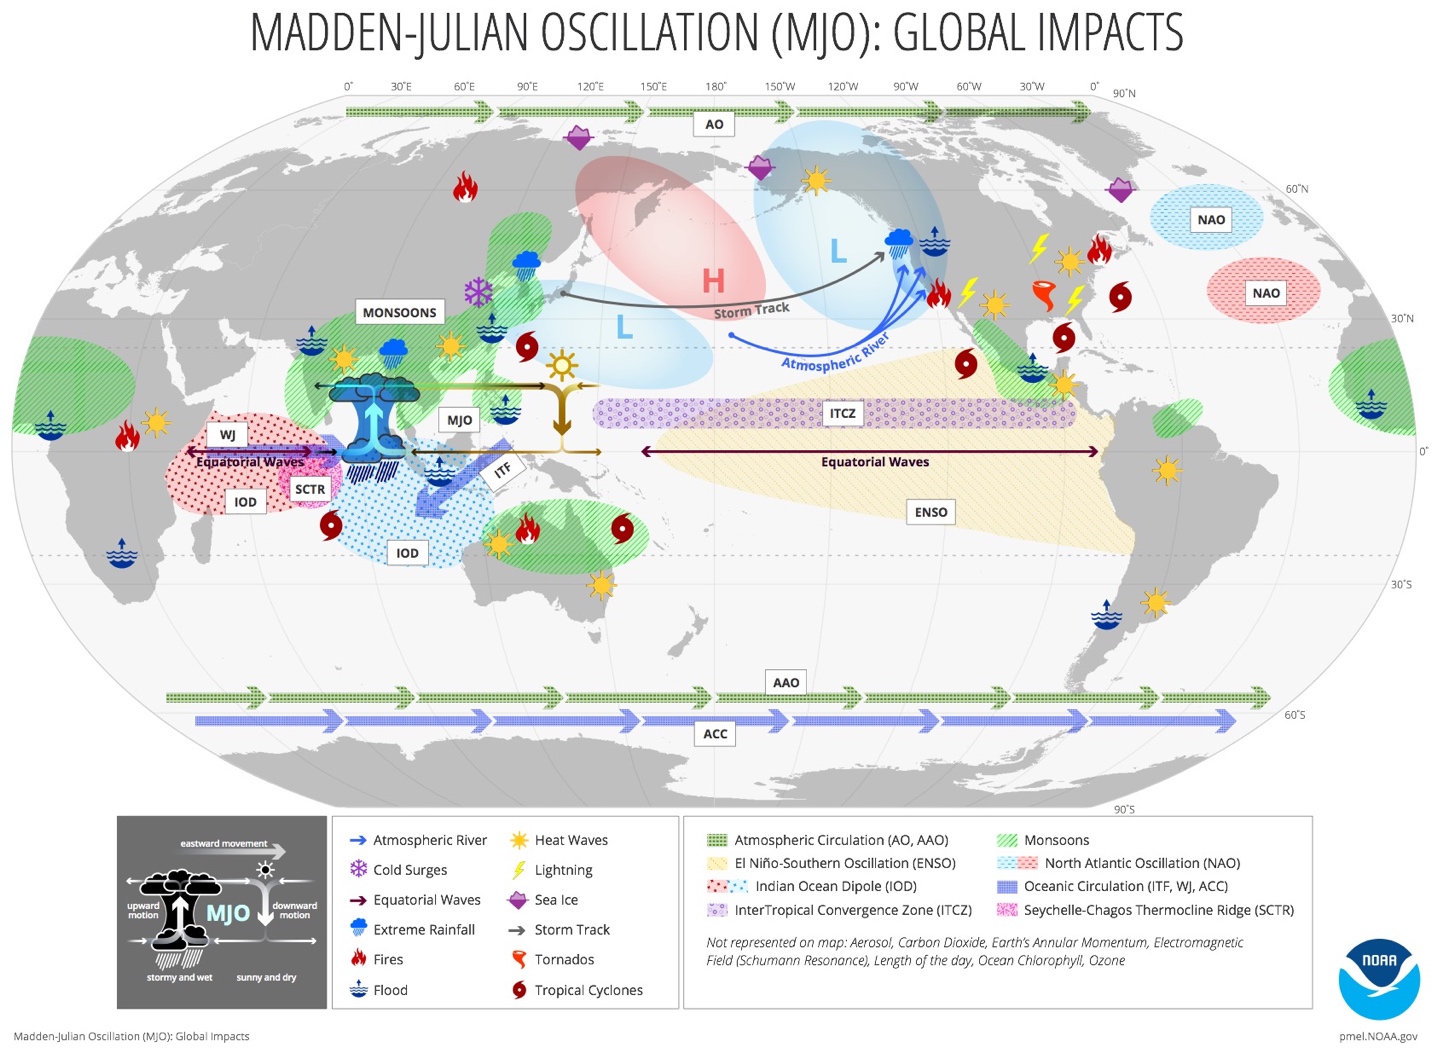 Madden-Julian Oscillation (MJO) global impacts map